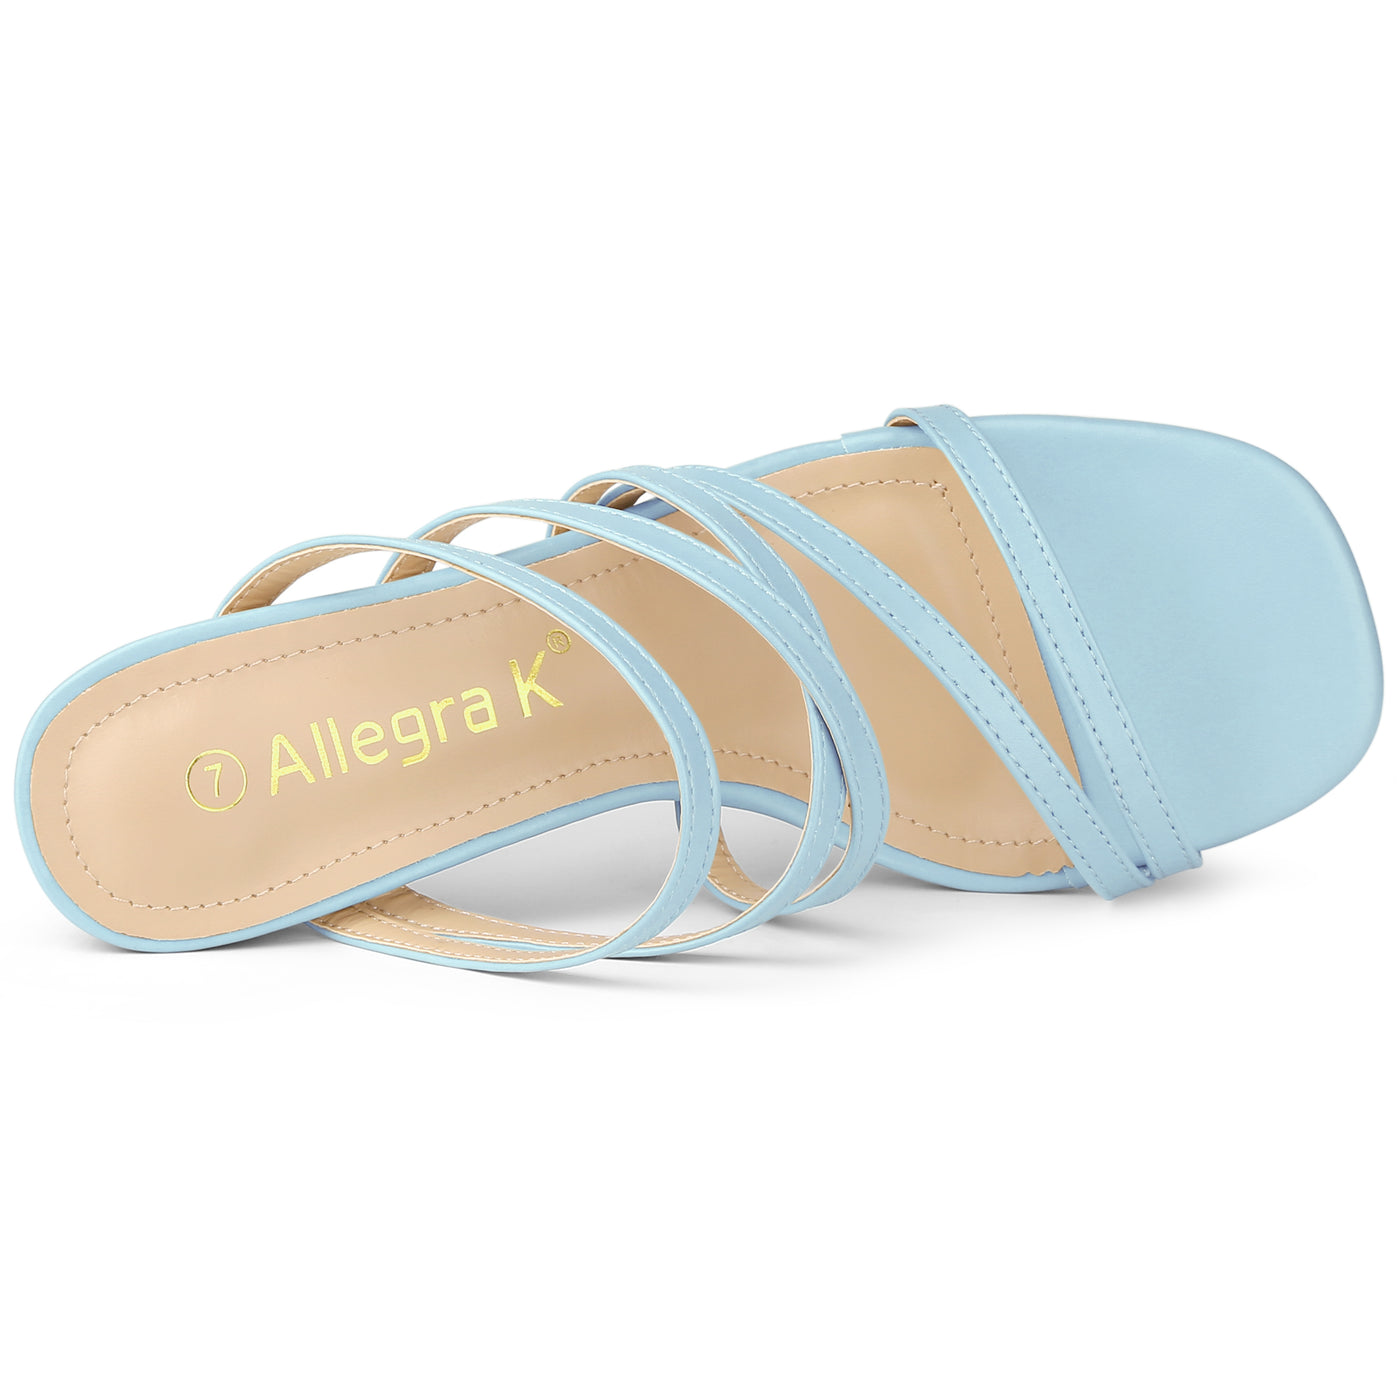 Allegra K Open Toe Crisscross Strap Strappy Block Slide Heel Sandals